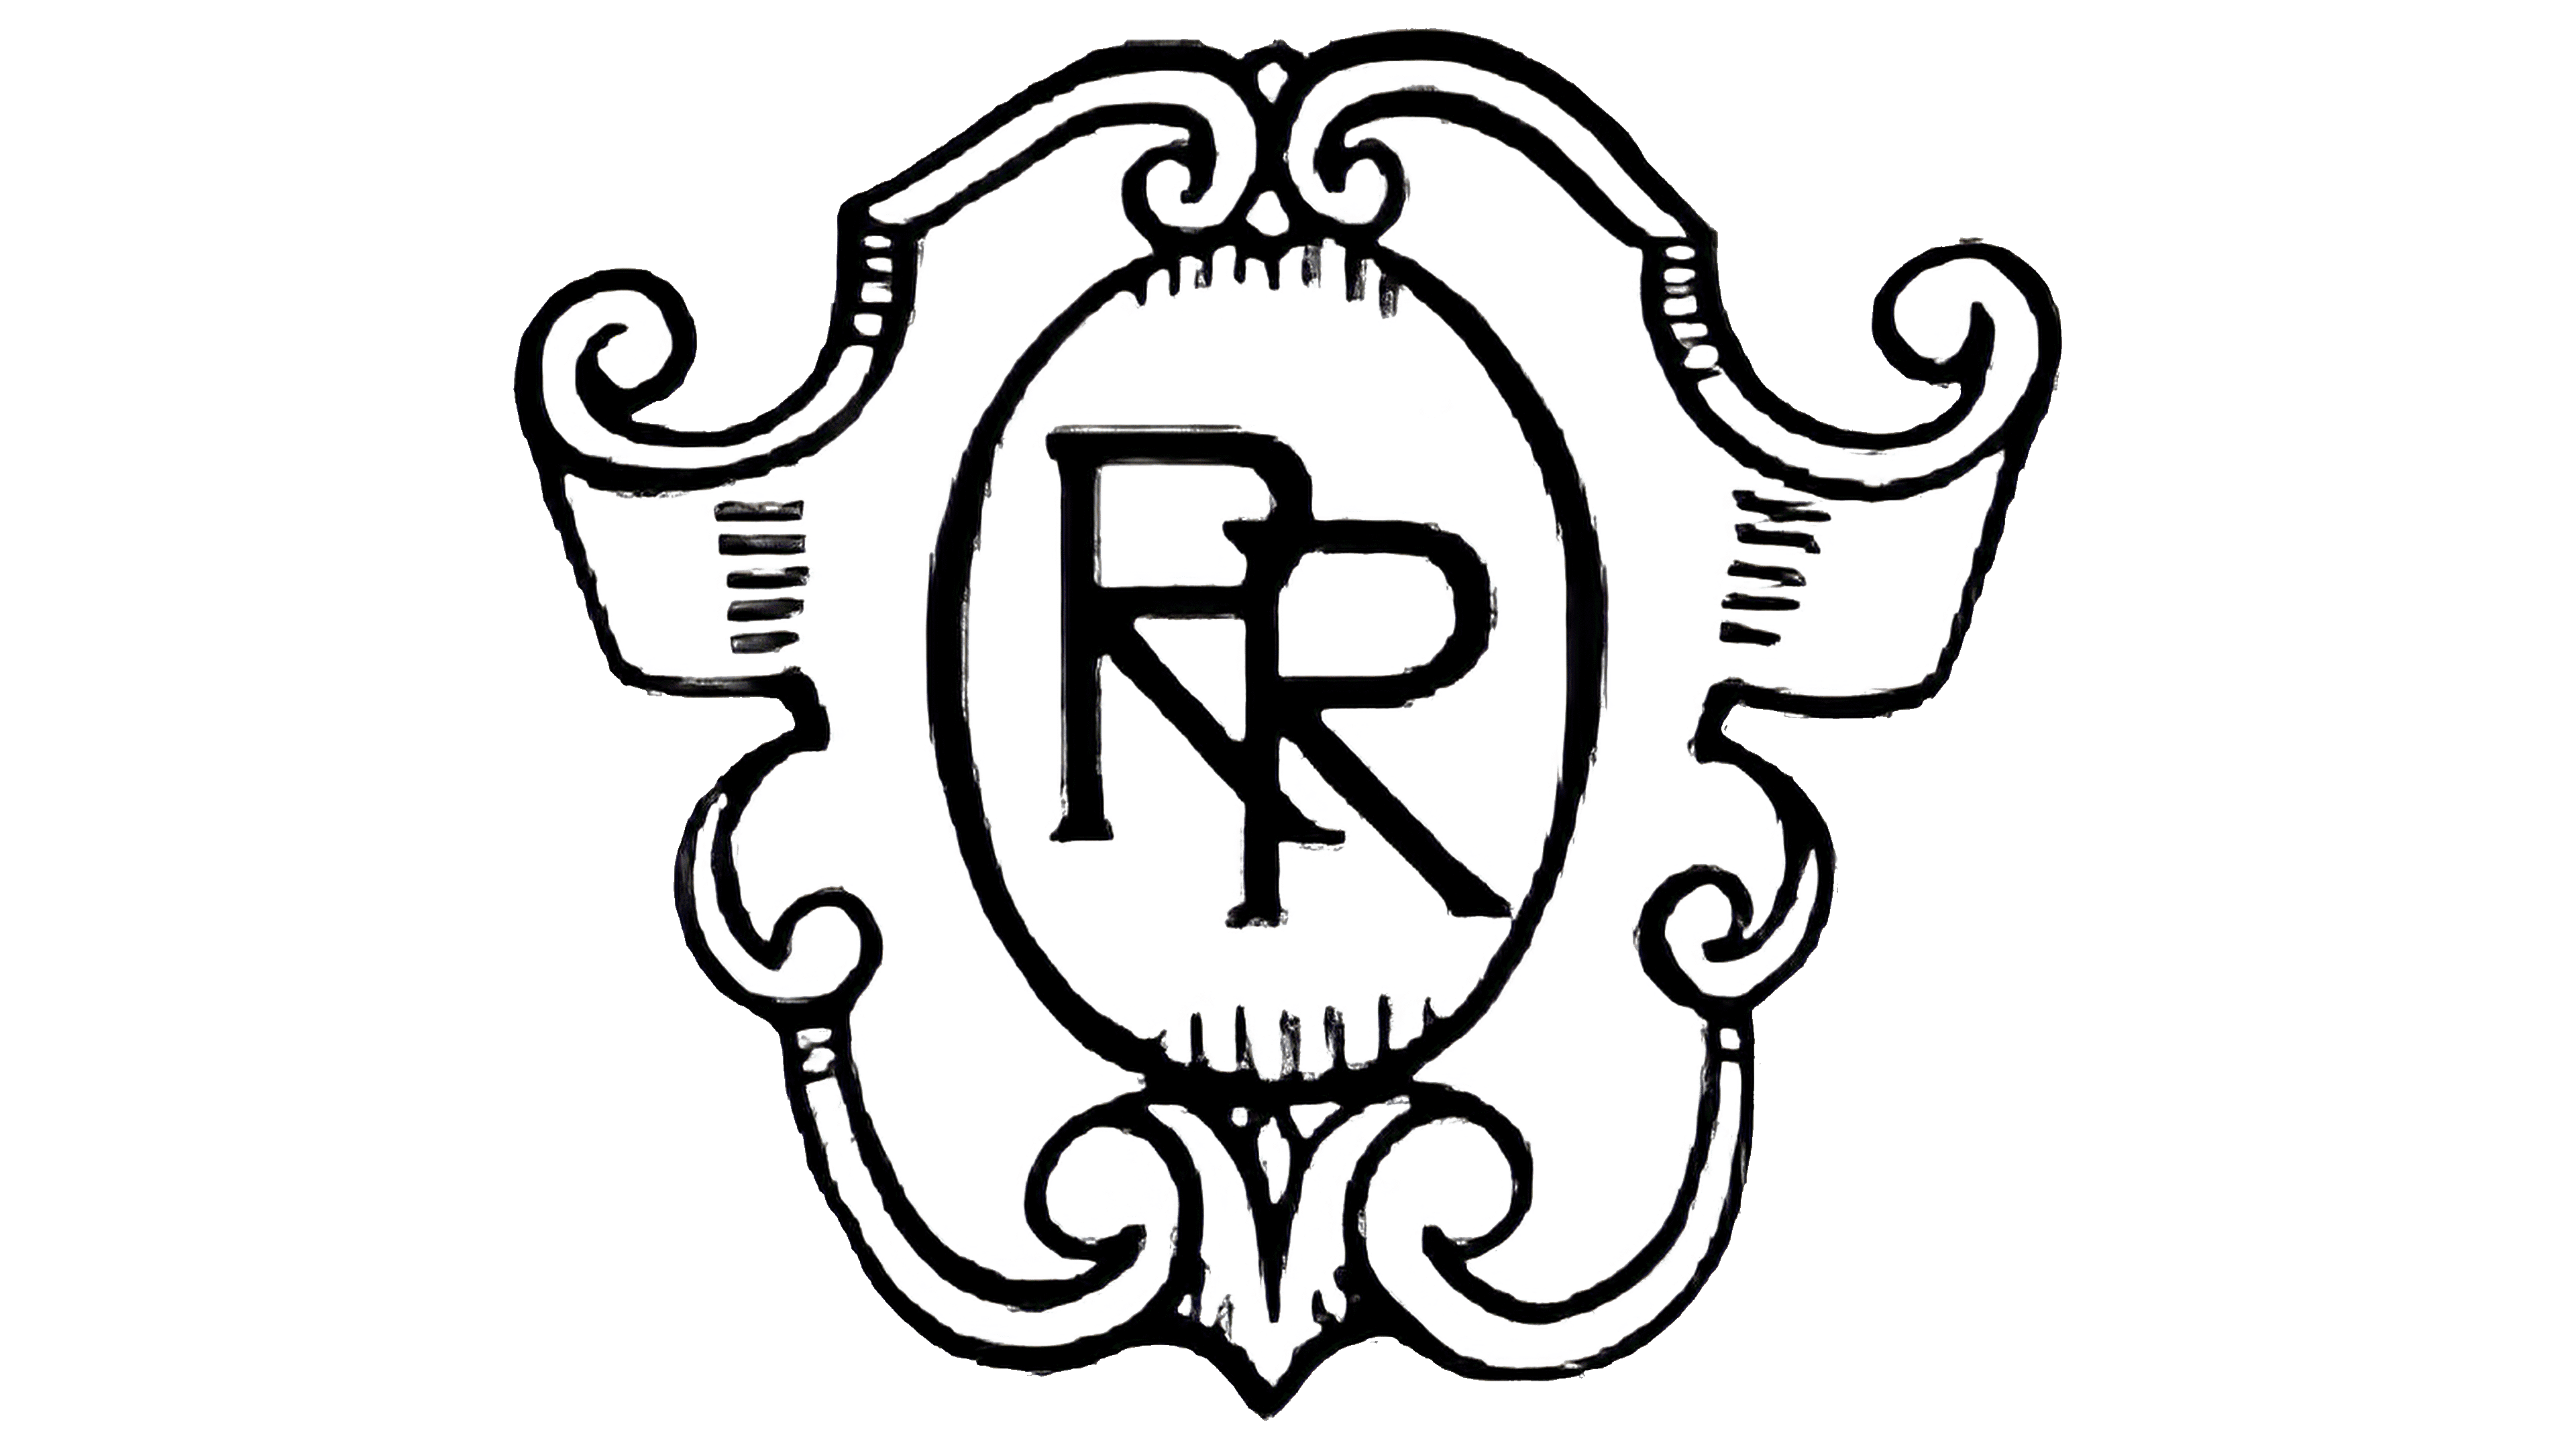 Rolls Royce Logo Tattoo Designs - wide 9